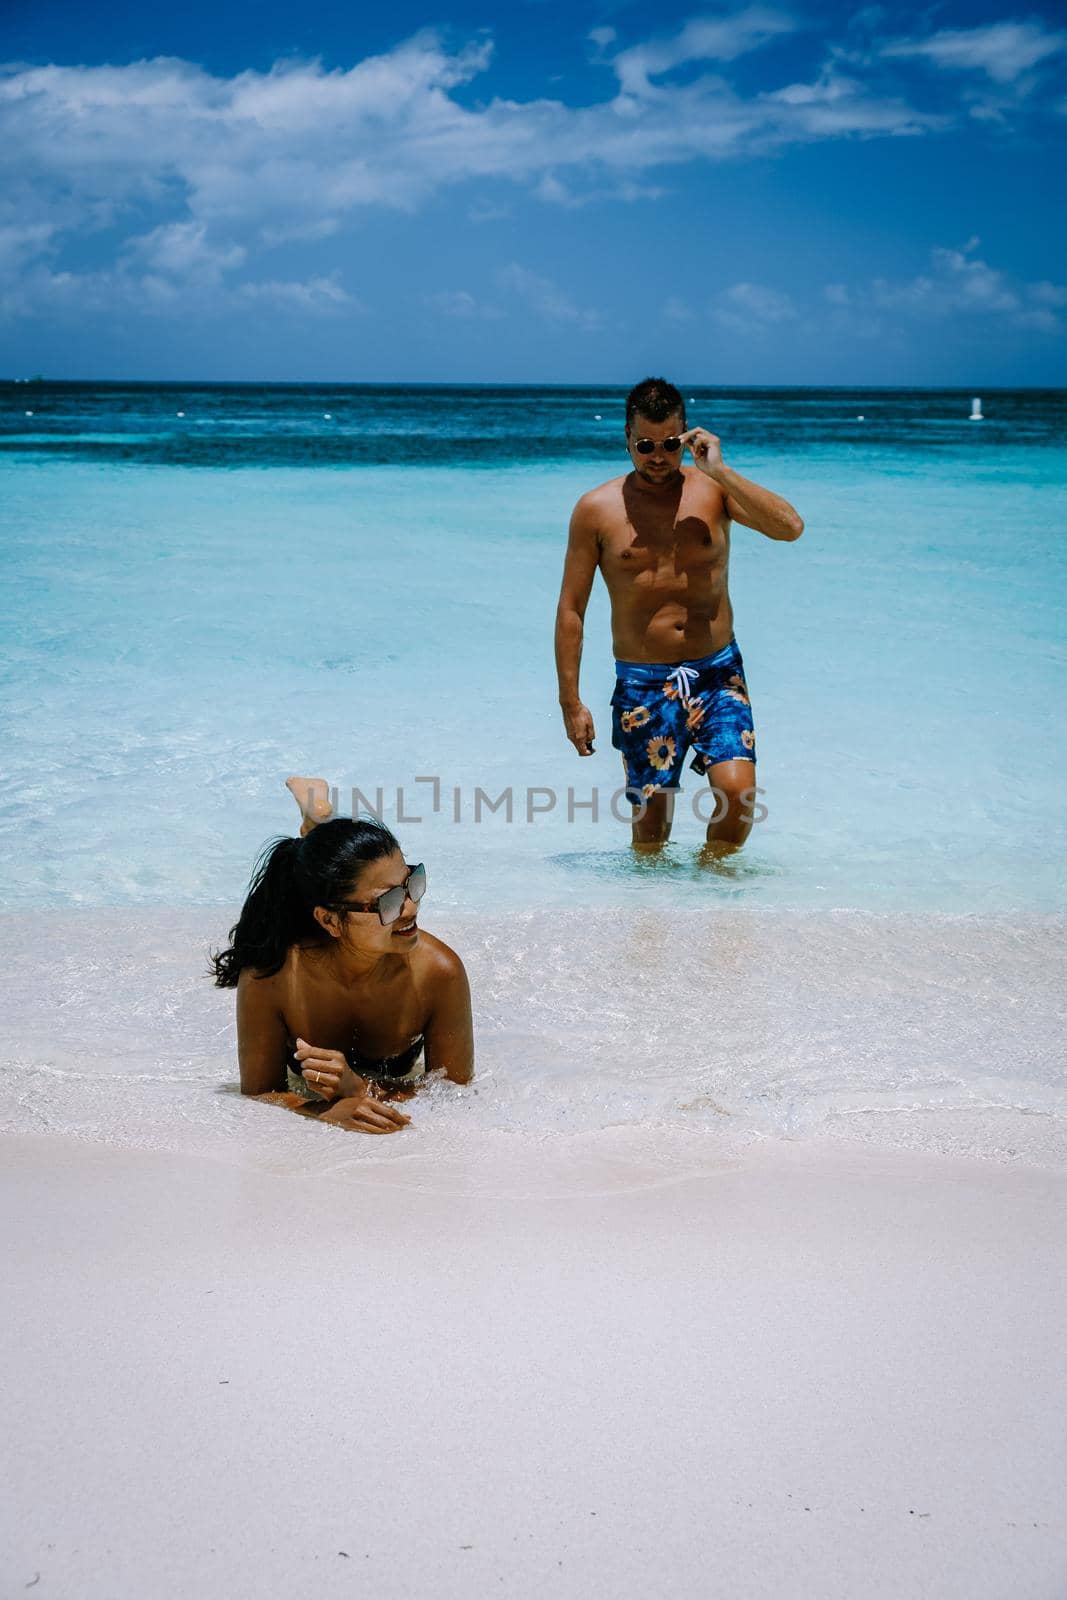 Palm Beach Aruba Caribbean, white long sandy beach with palm trees at Aruba Antilles, couple man and woman mid age on a white beach with palm trees